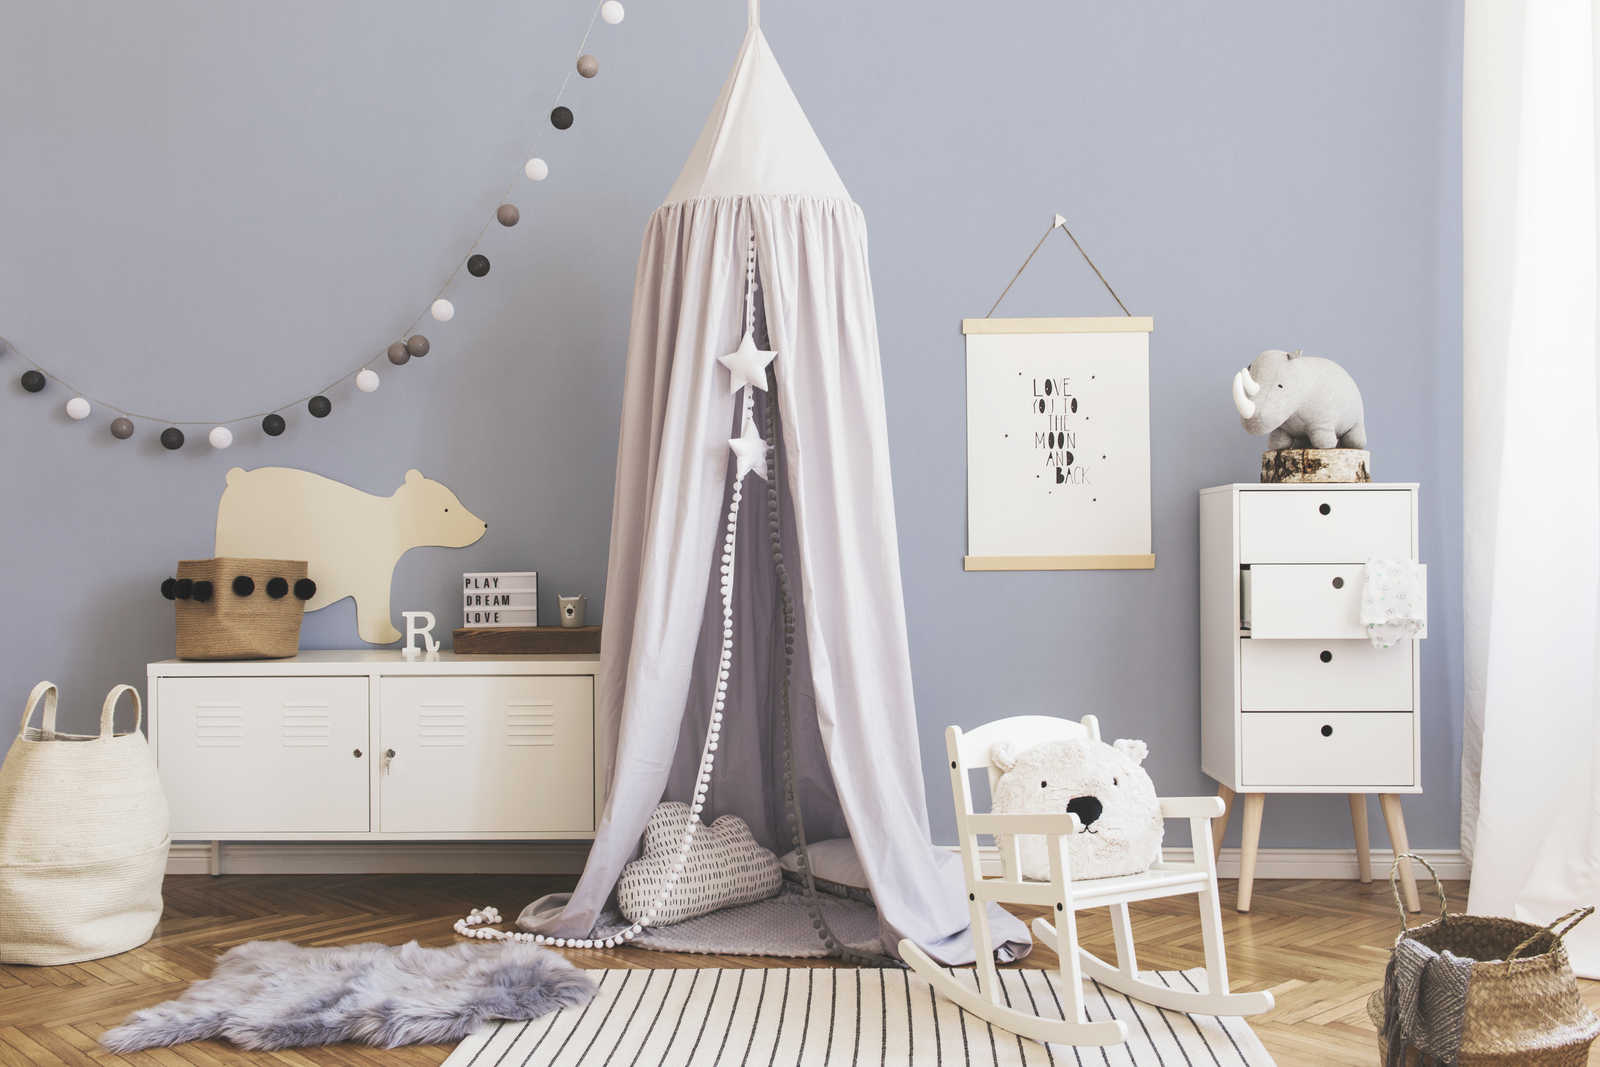             Tapete Kinderzimmer uni glatt – Grau
        